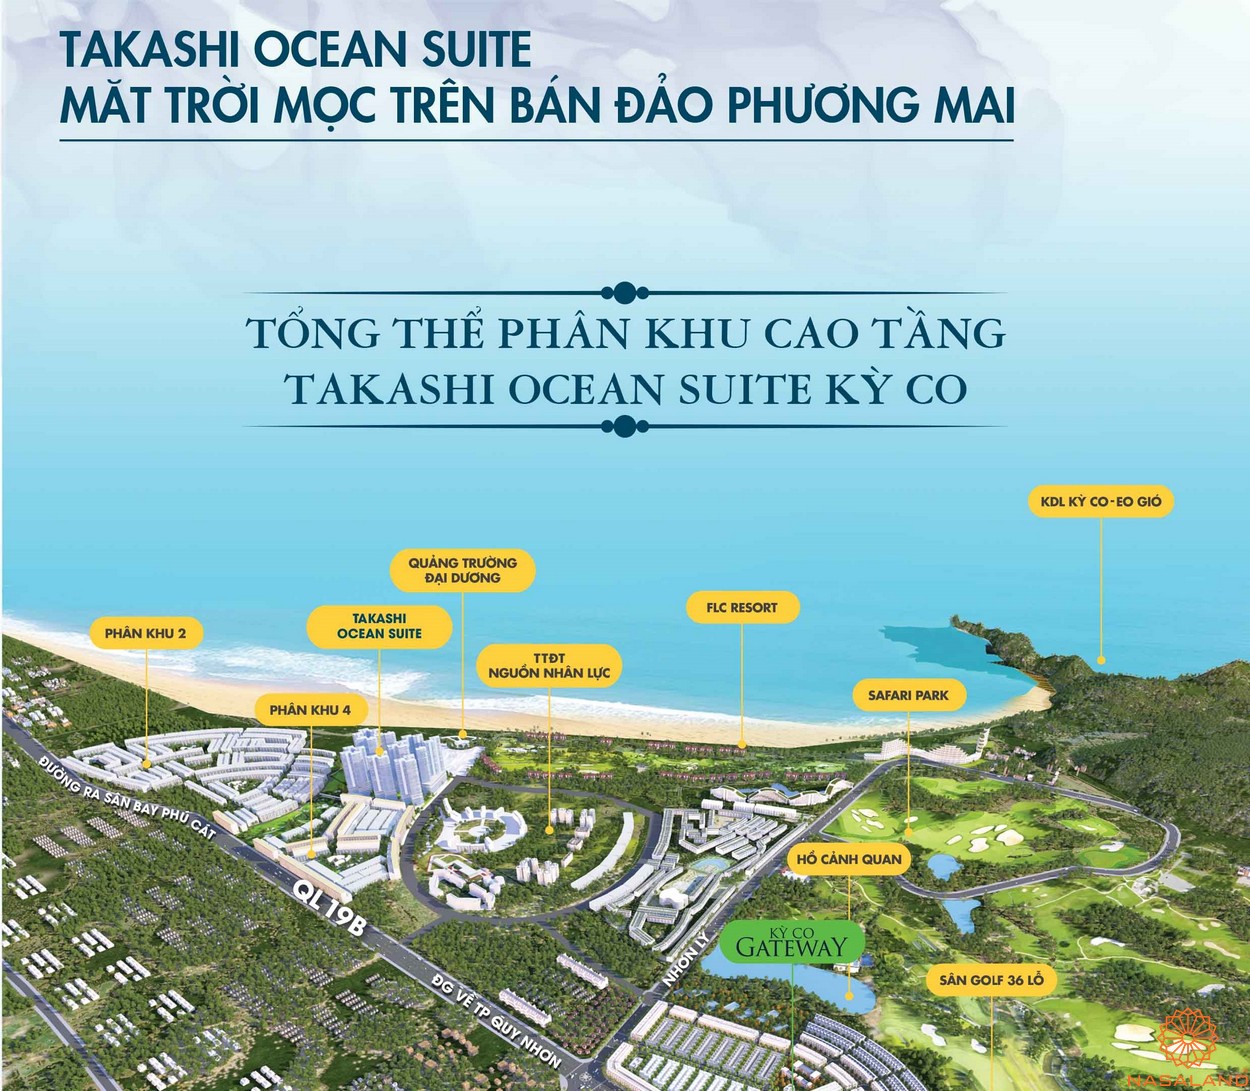 Takashi Ocean Suite Quy Nhơn Kỳ Co